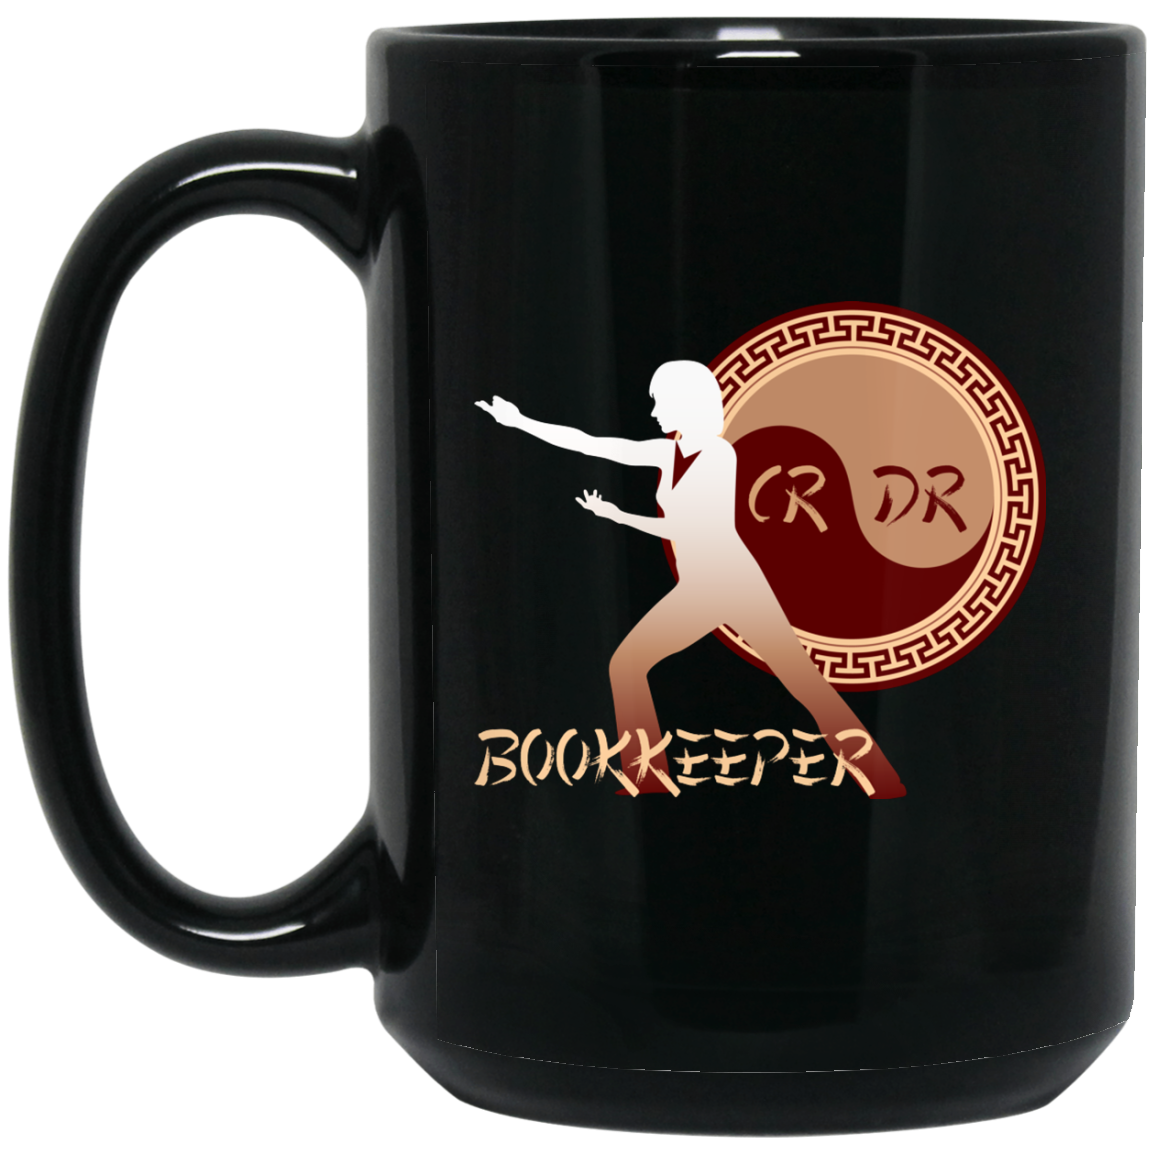 Bookkeeper Gifts For Women - Bookkeeper Coffee Mug - GoneBold.gift